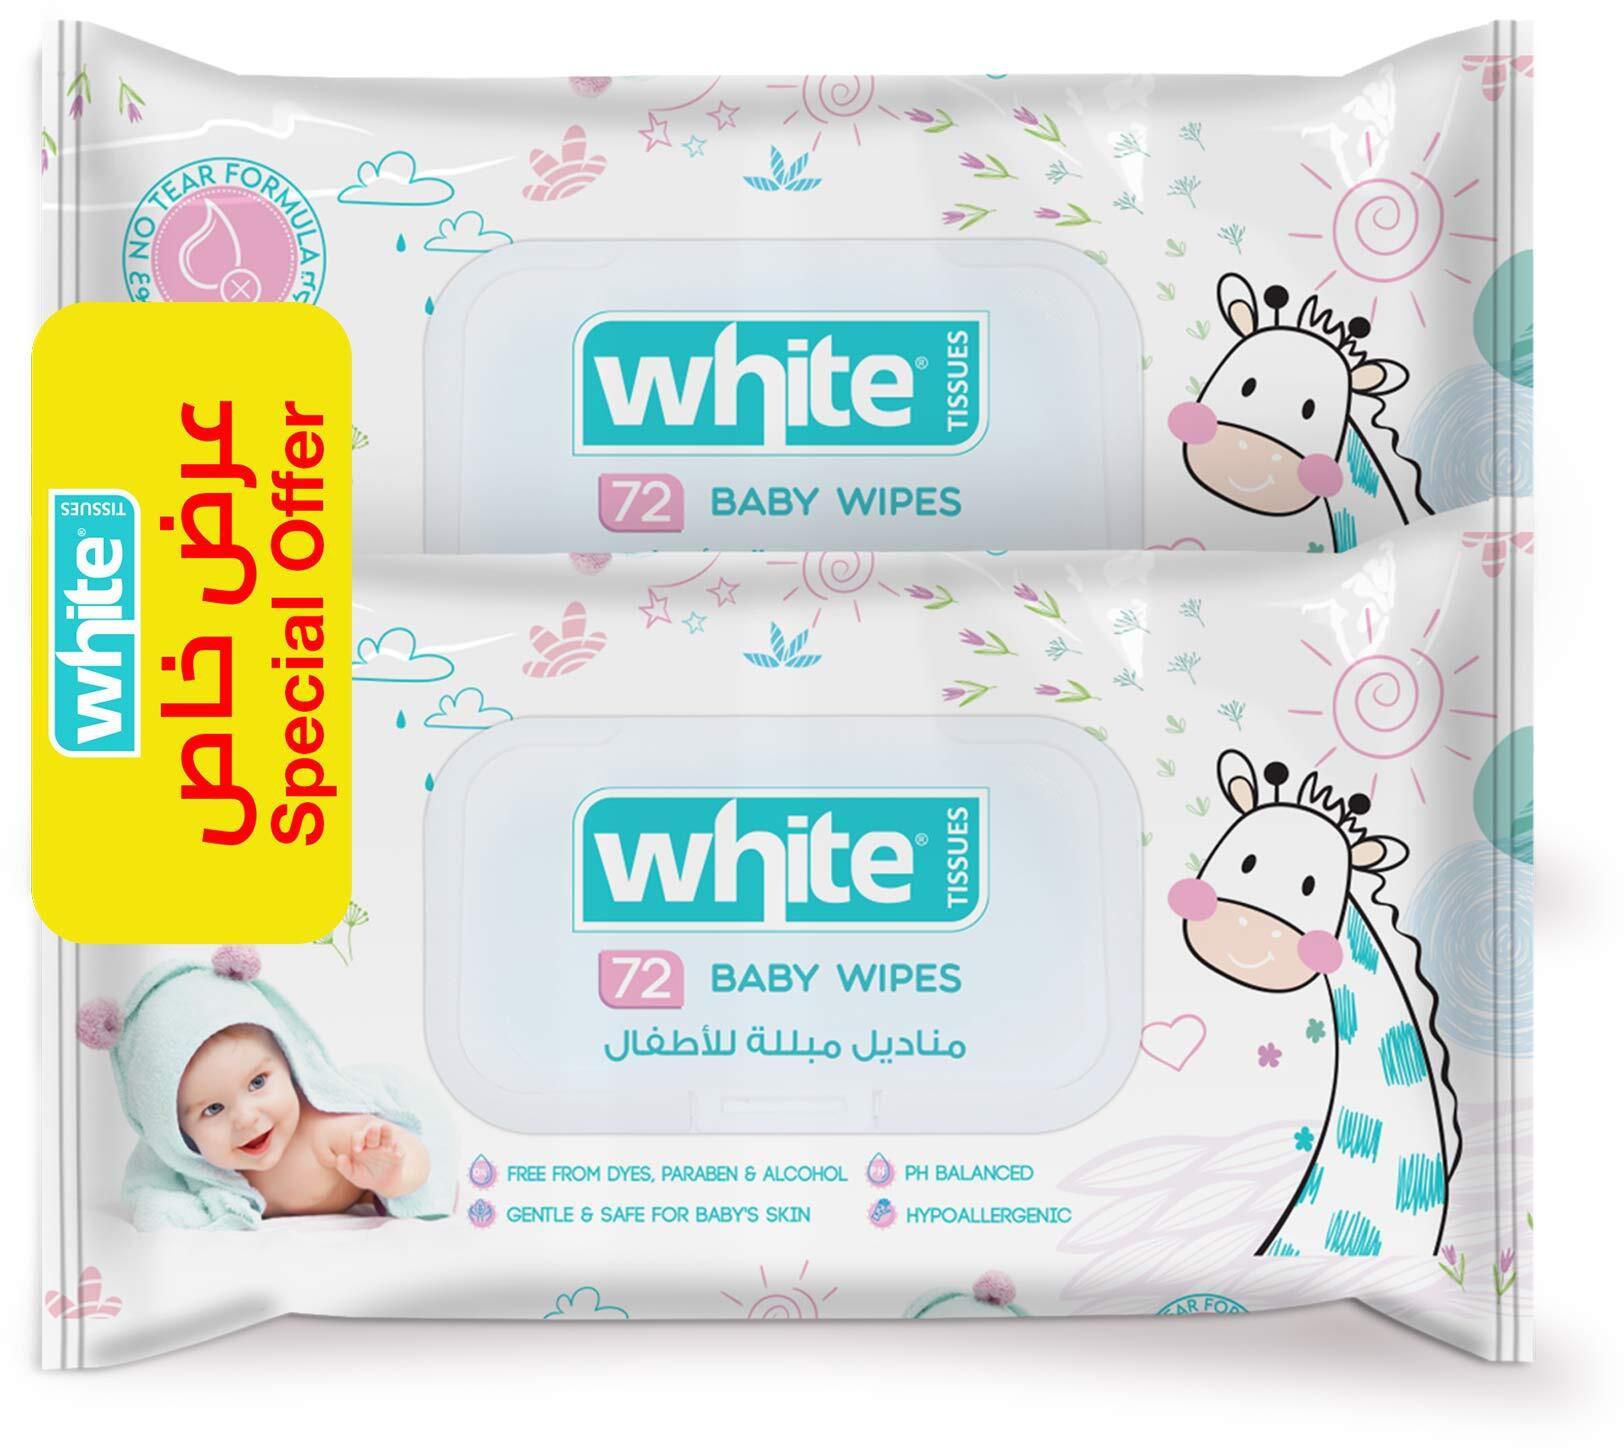 White Wipes - Baby - 72 Wipes x 2